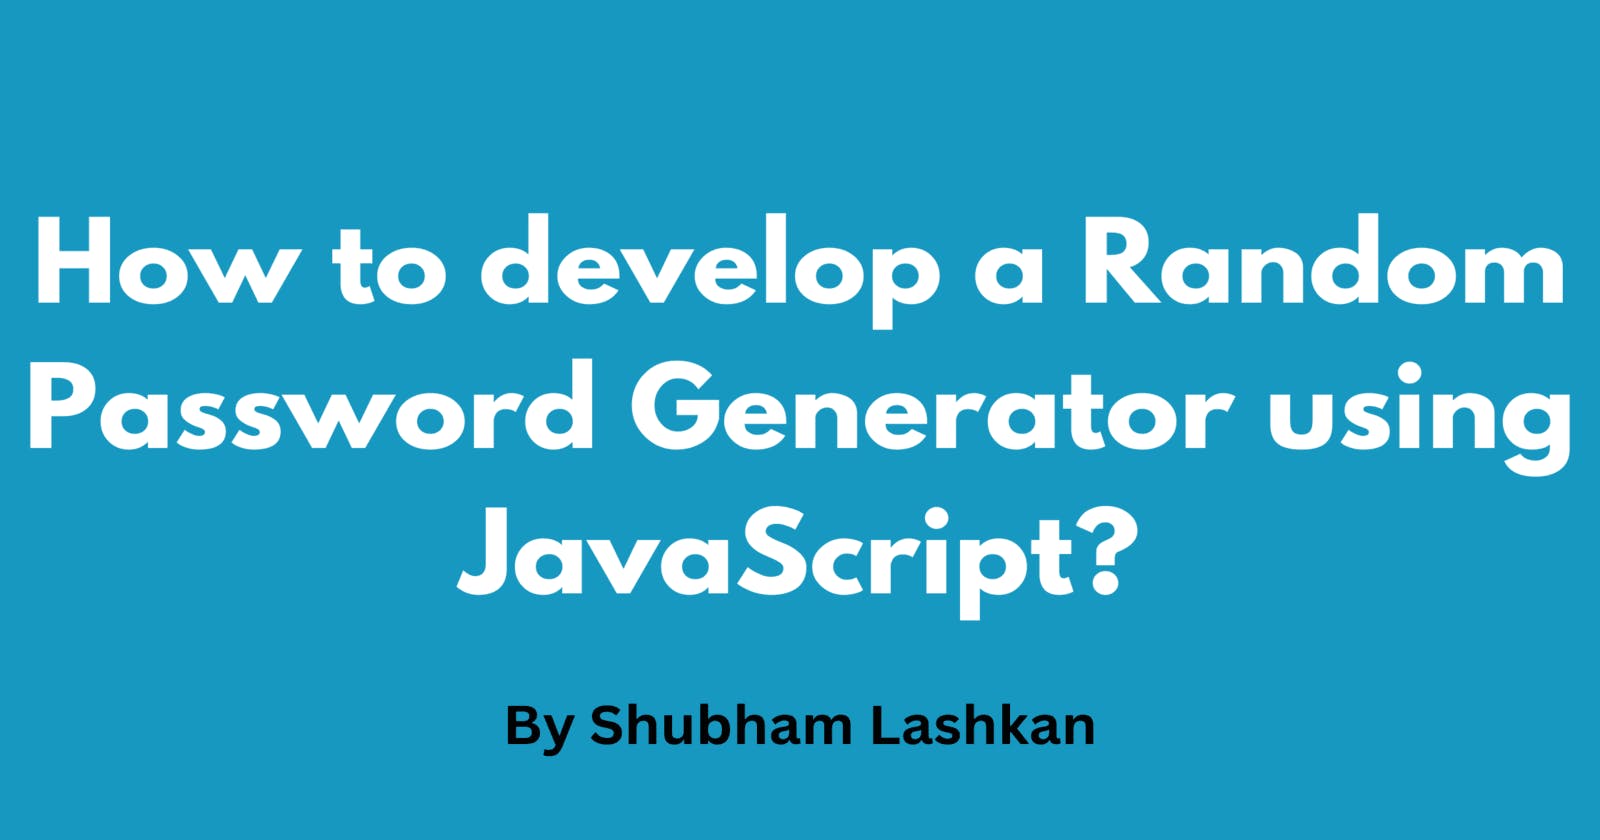 How to develop a Random Password Generator using JavaScript?